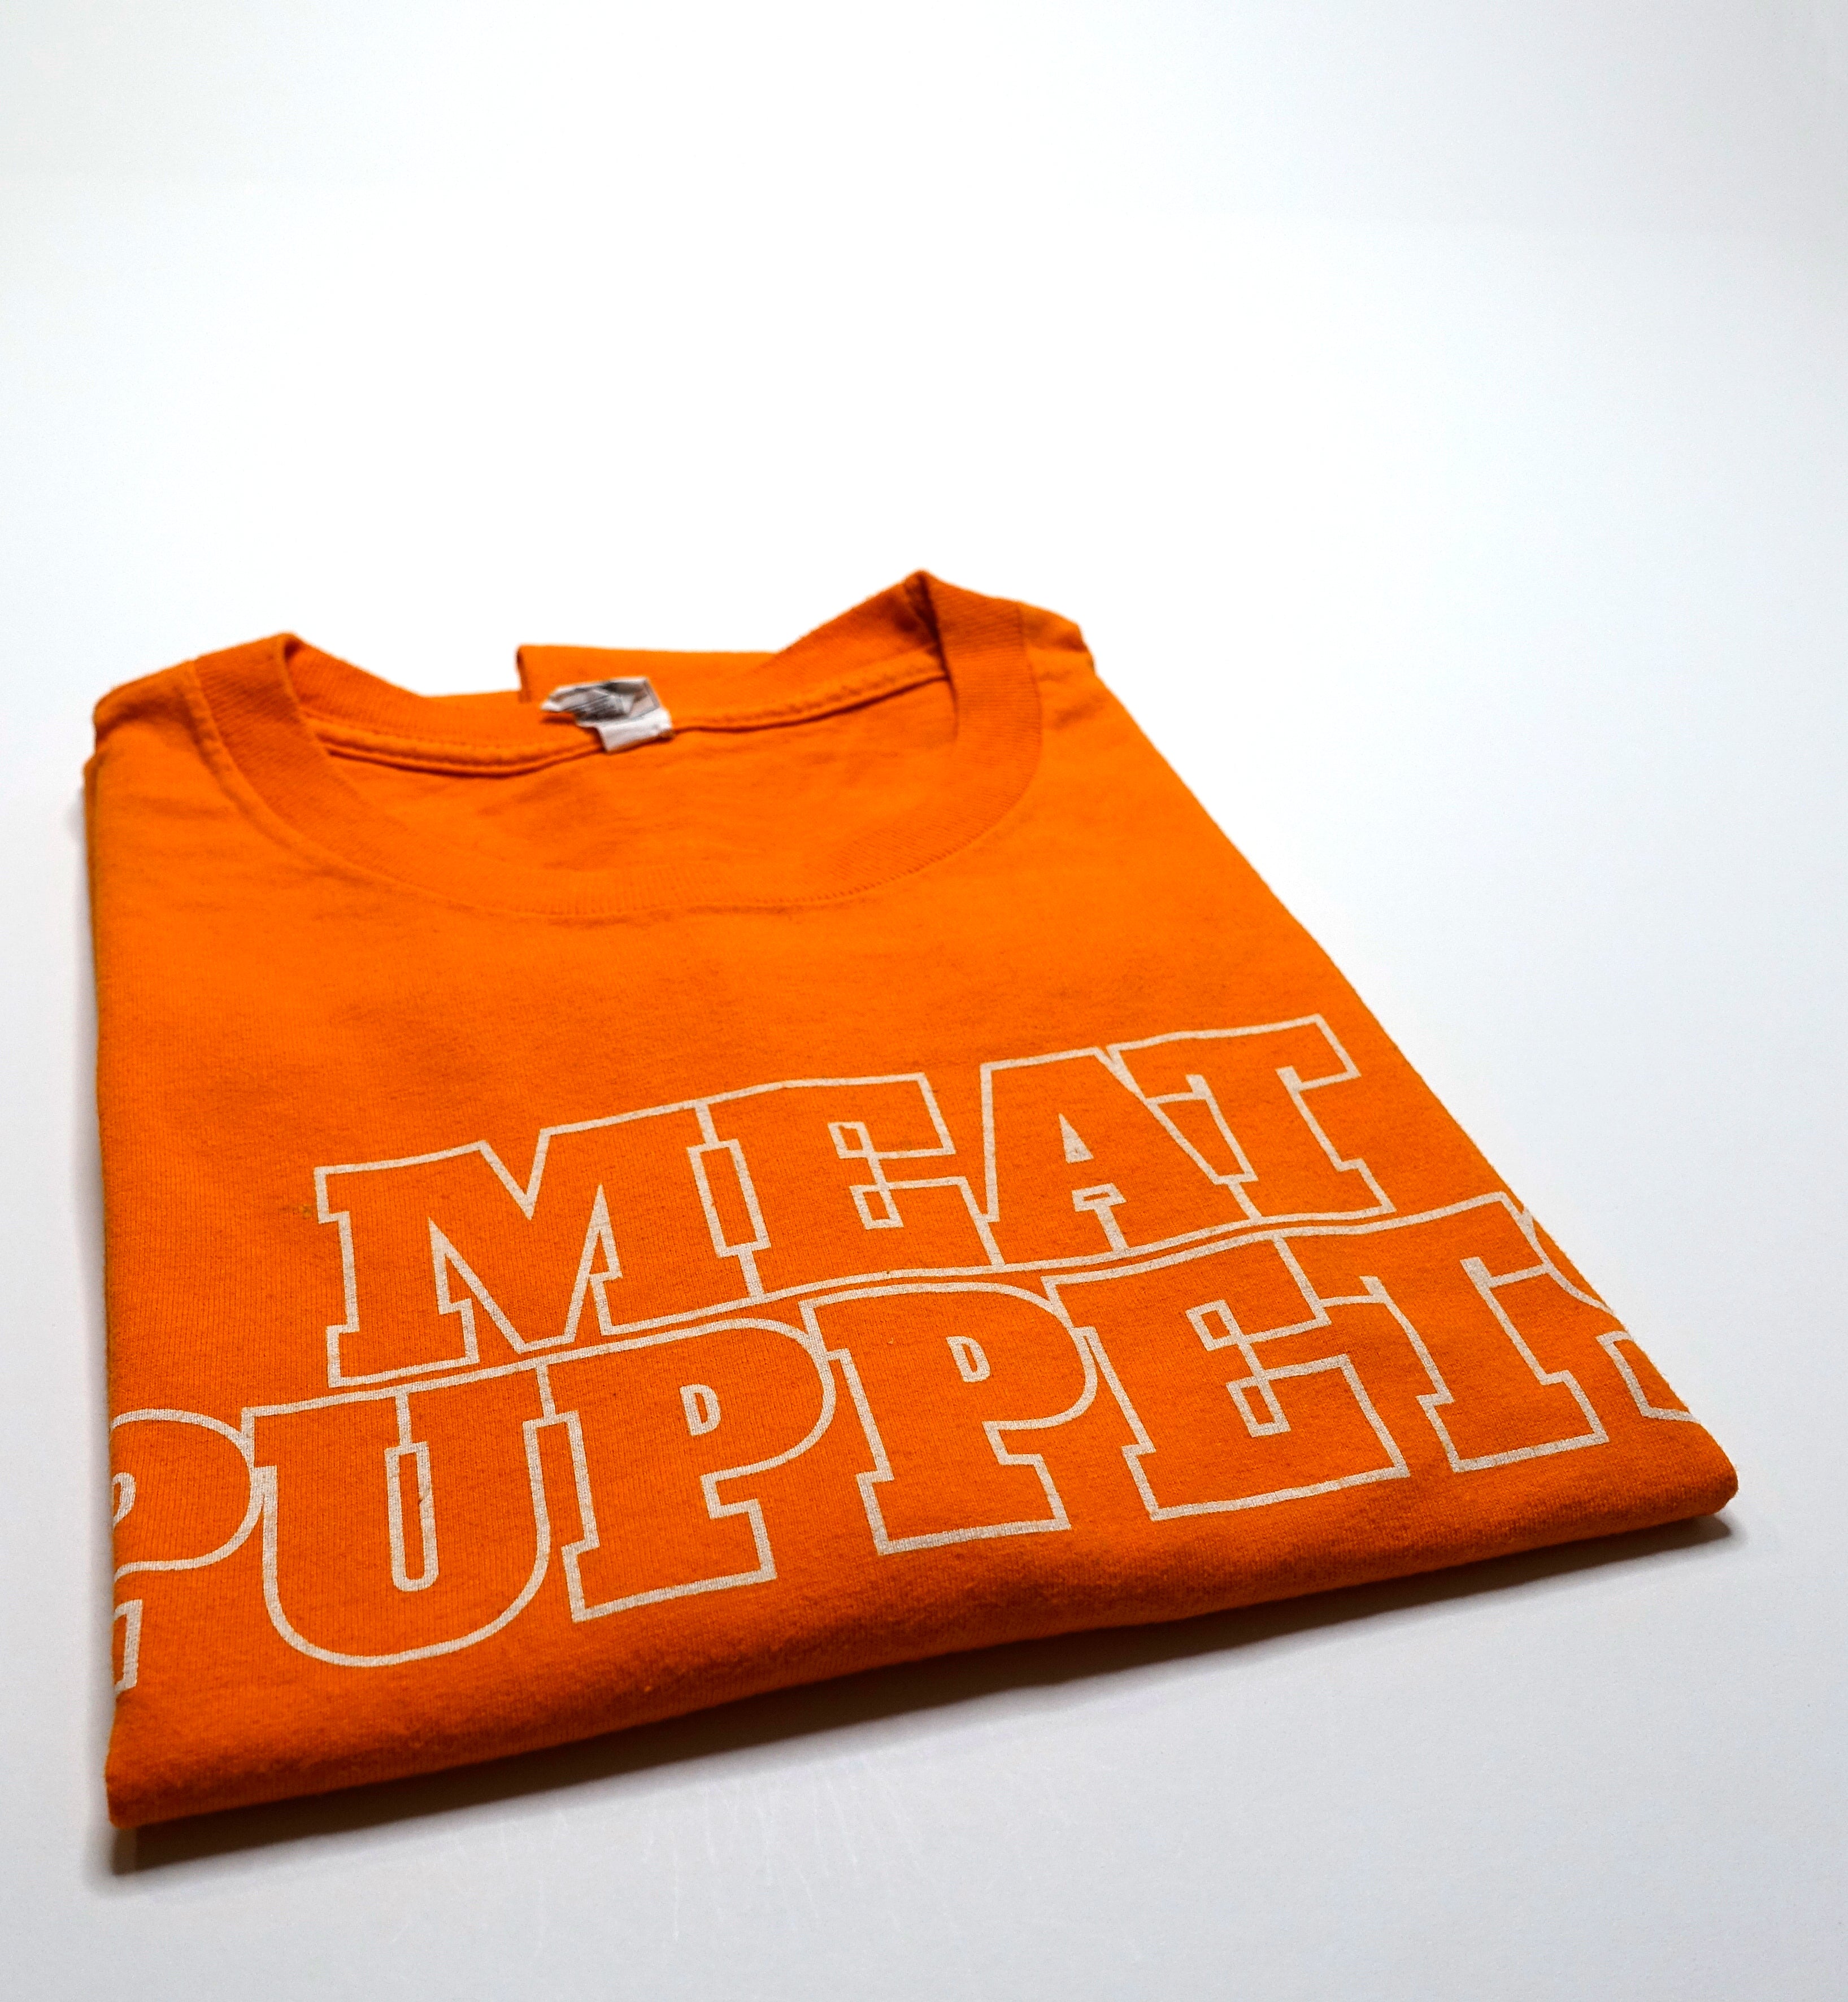 Meat Puppets - Orange Logo Tour Shirt Size Large